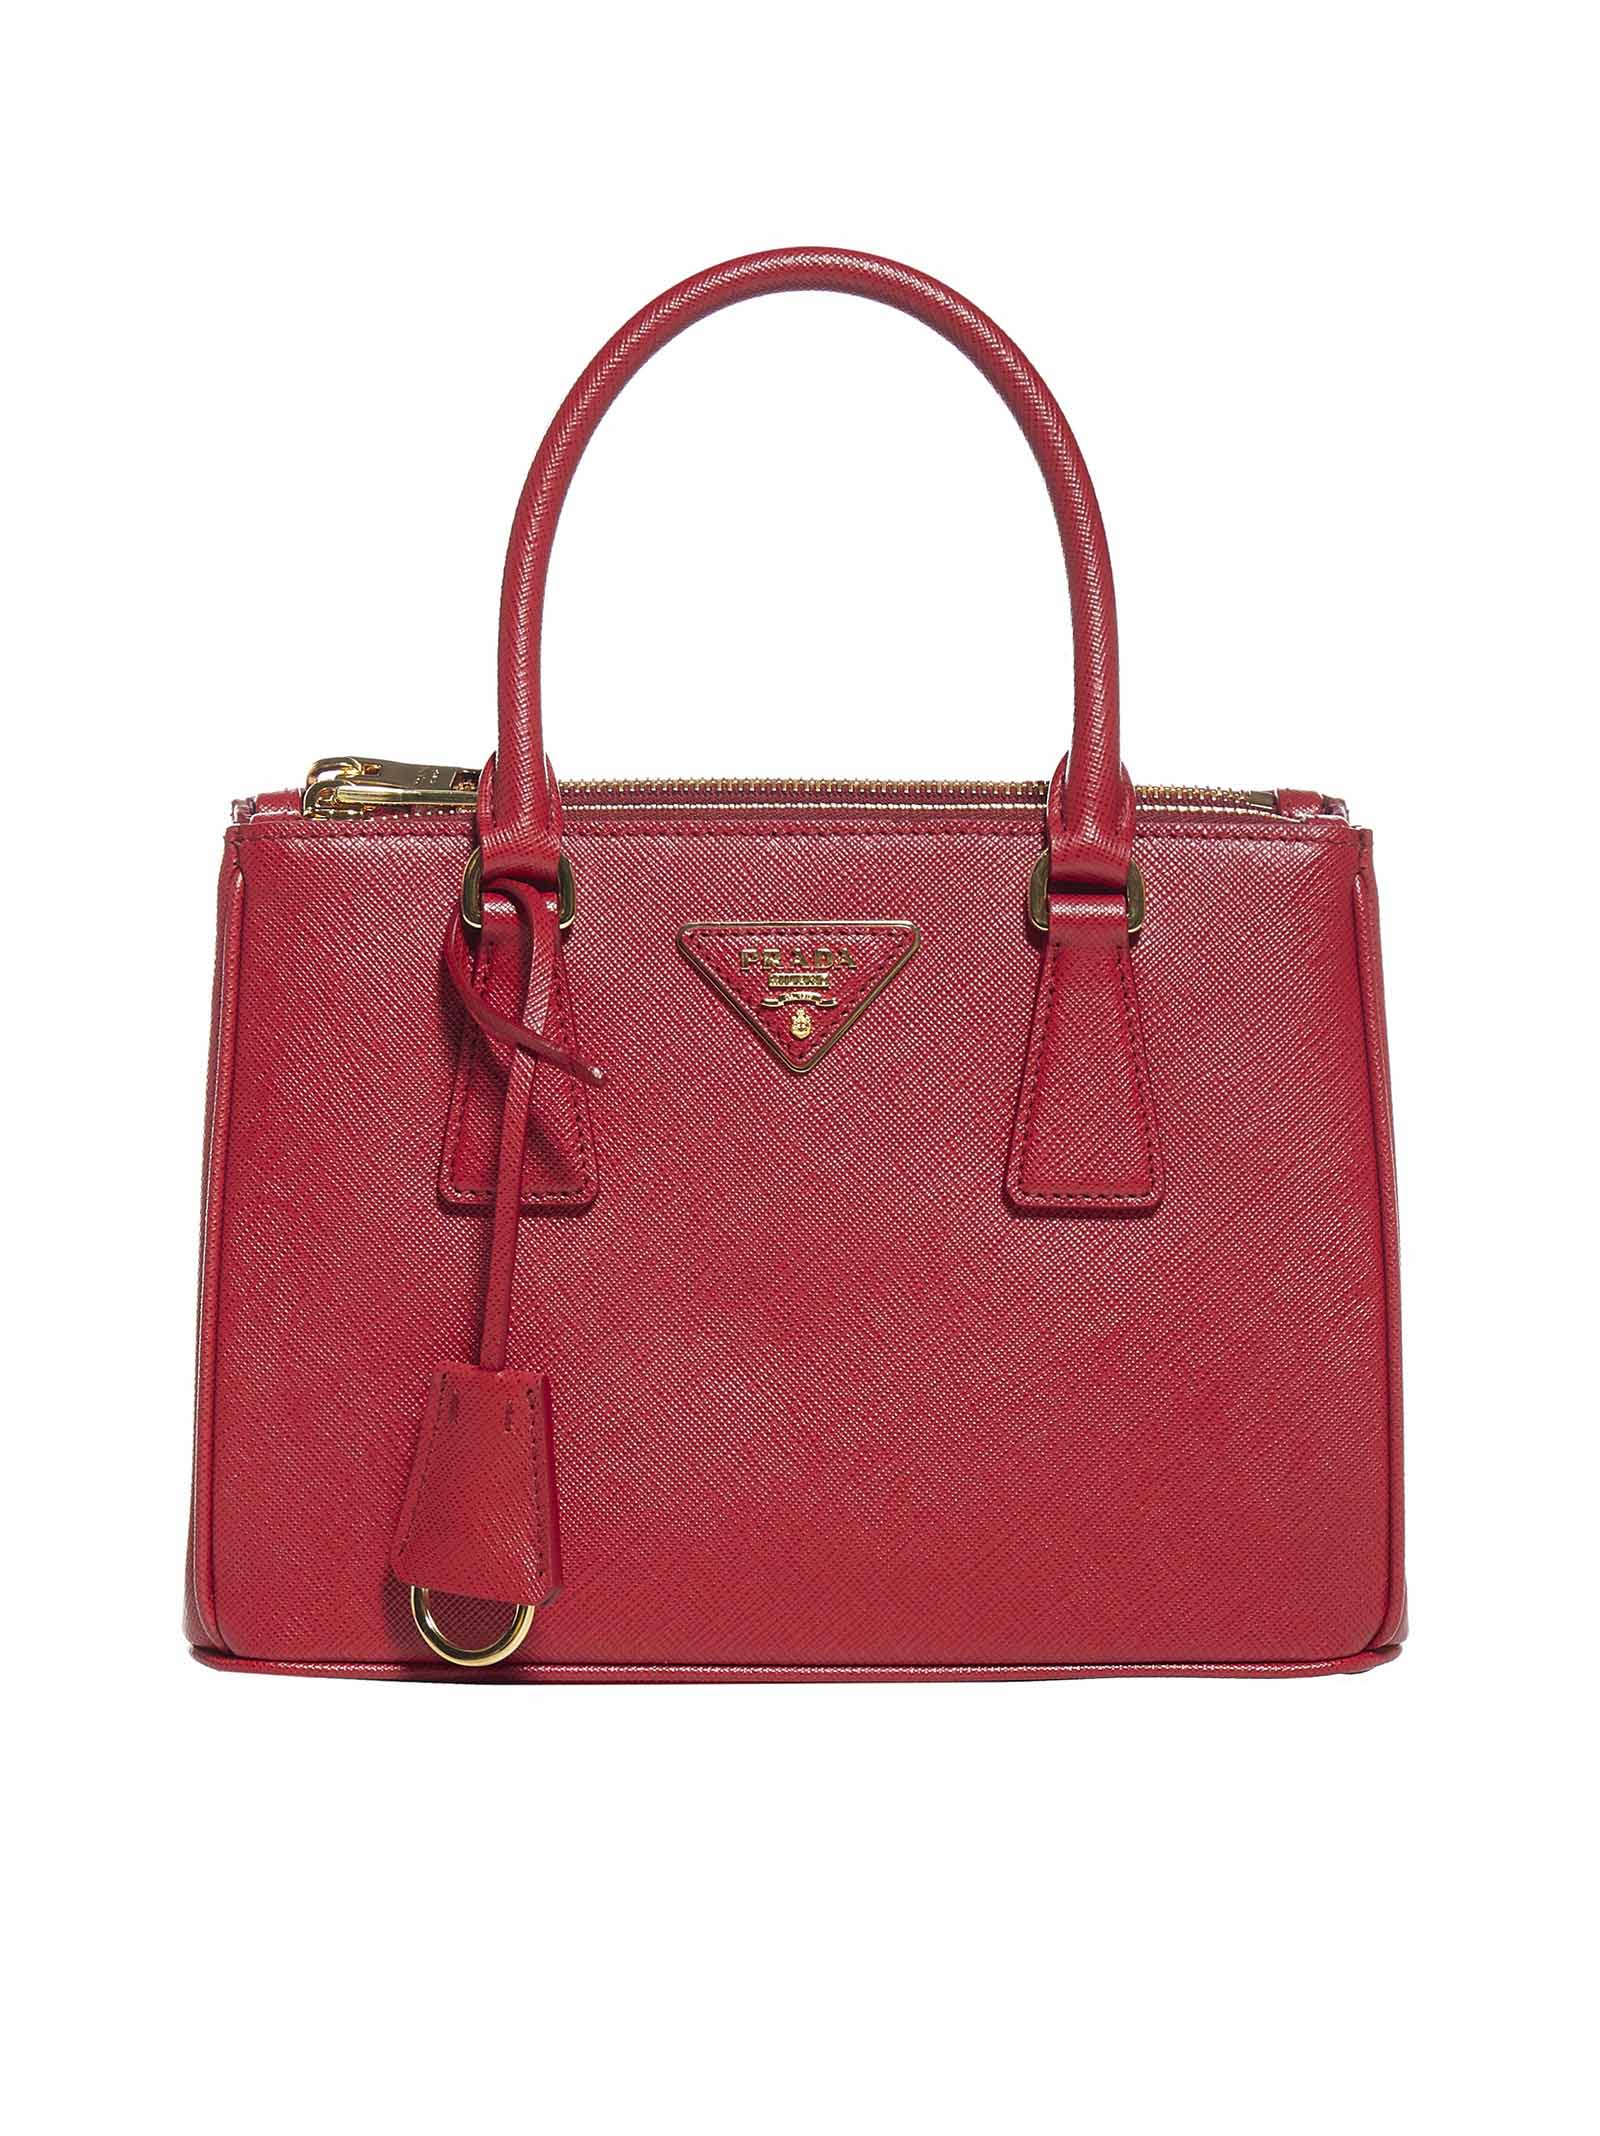 Prada Galleria Mini Saffiano Leather Bag